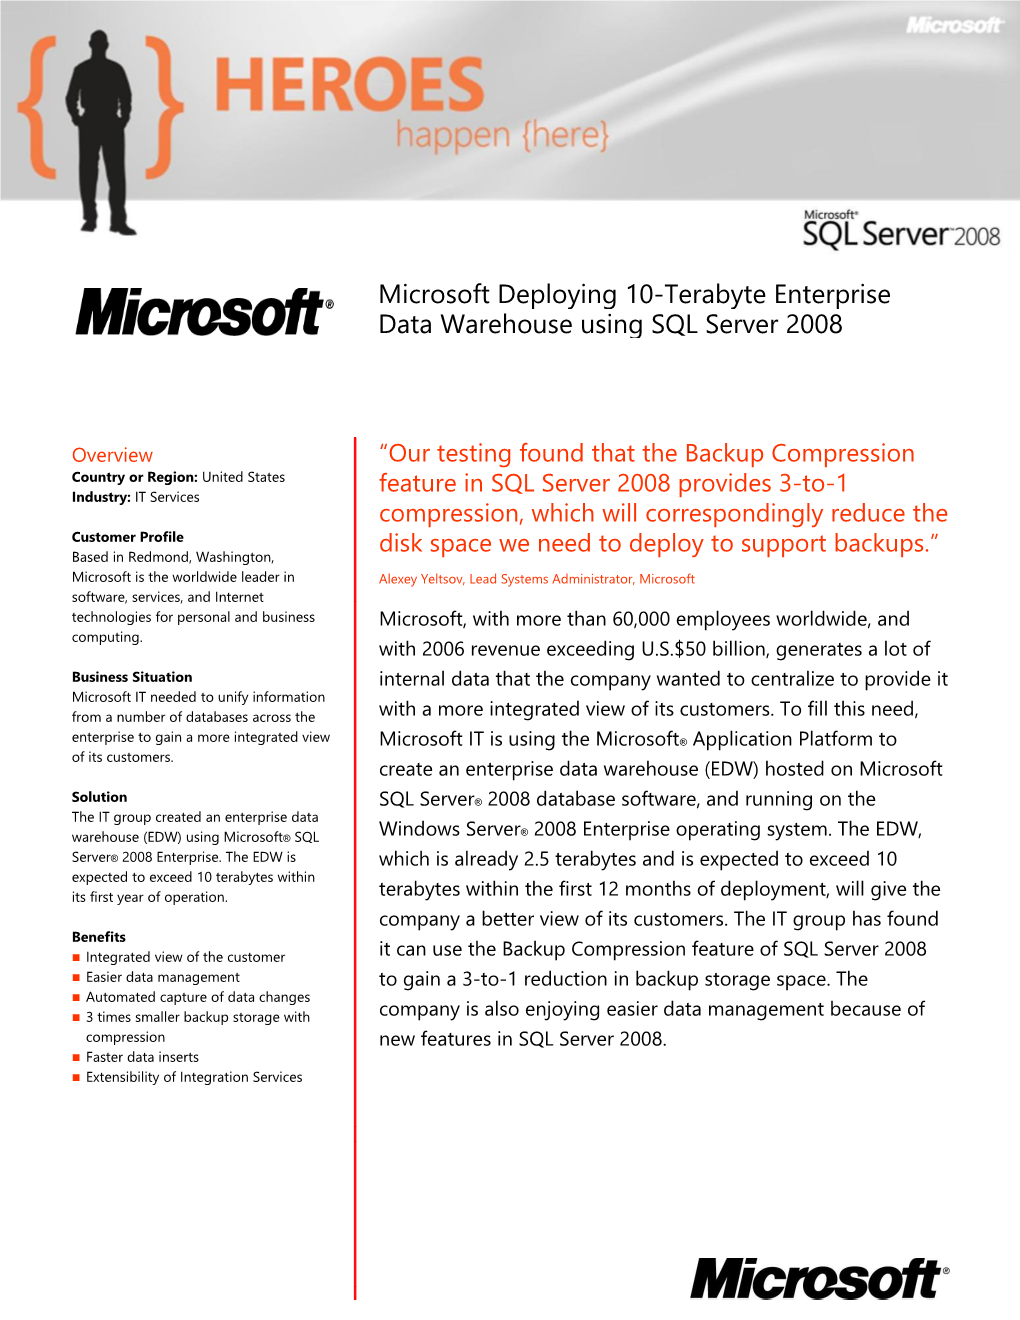 Microsoft IT Enterprise Data Warehouse - SQL Server 2008 Case Study